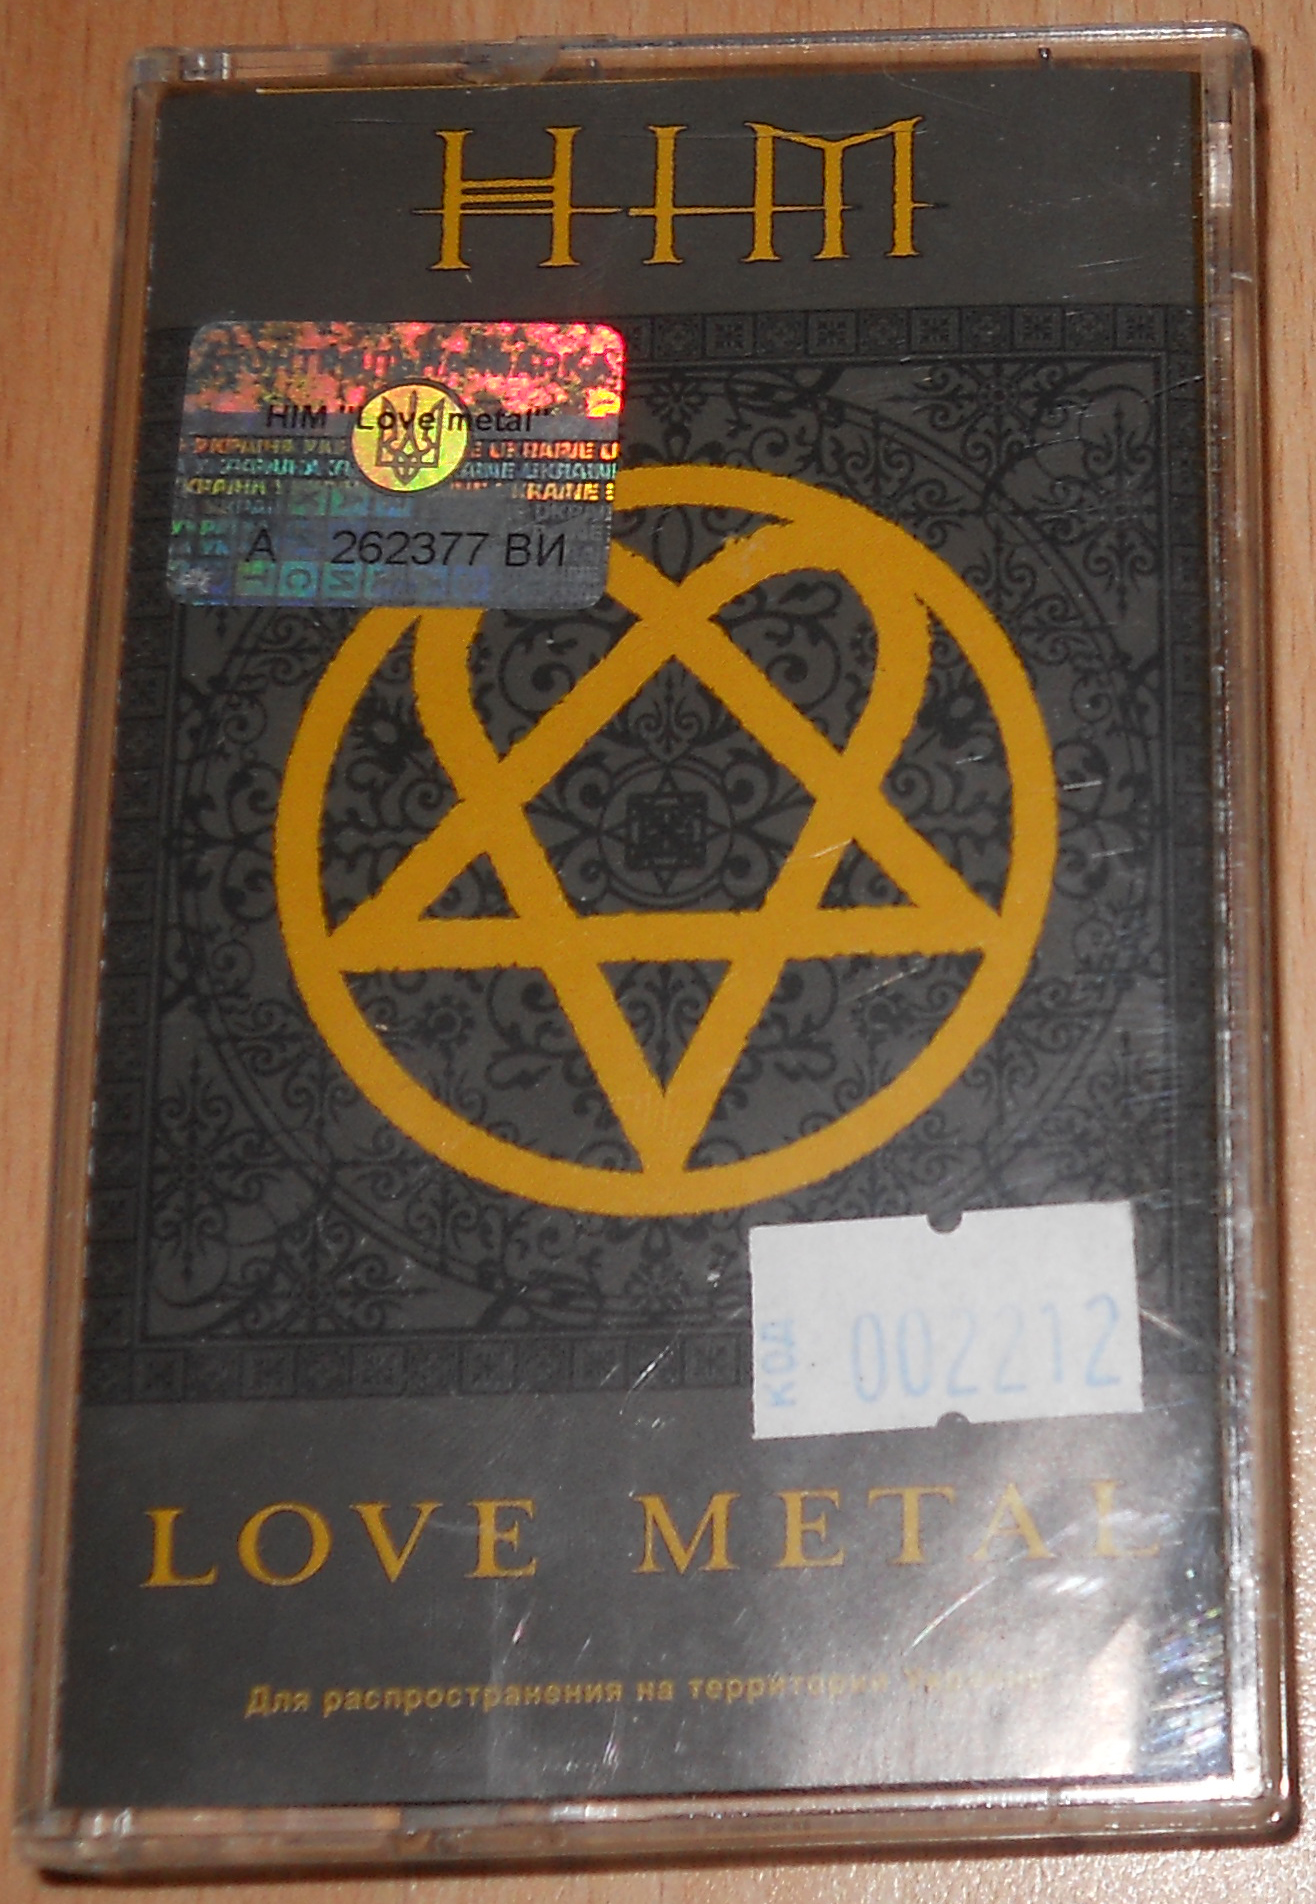 Лов метал. Him Love Metal. Love Metal him обложка. Him Love Metal аудиокассеты. Him - Love Metal [Limited Edition] (2003).